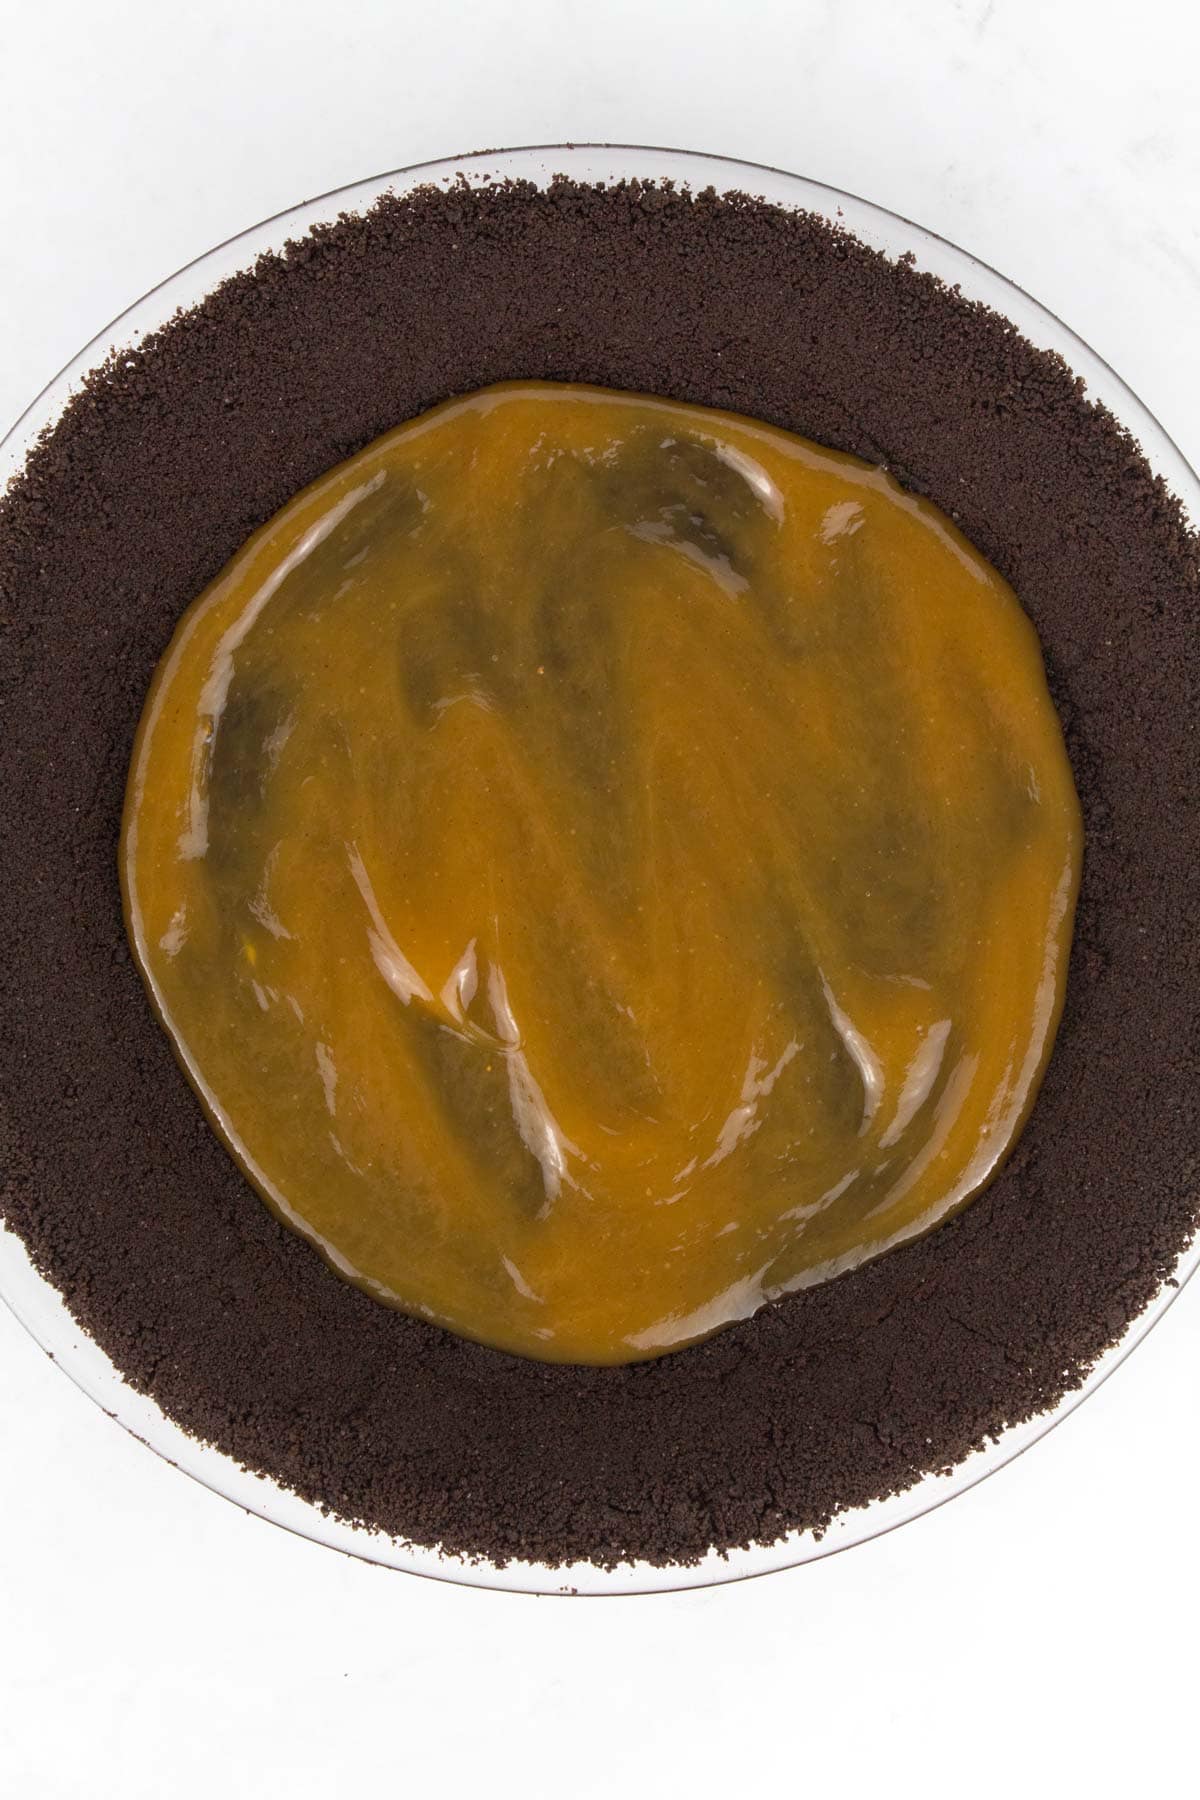 Ganache spread on crust of Chocolate Peanut Butter Pie.